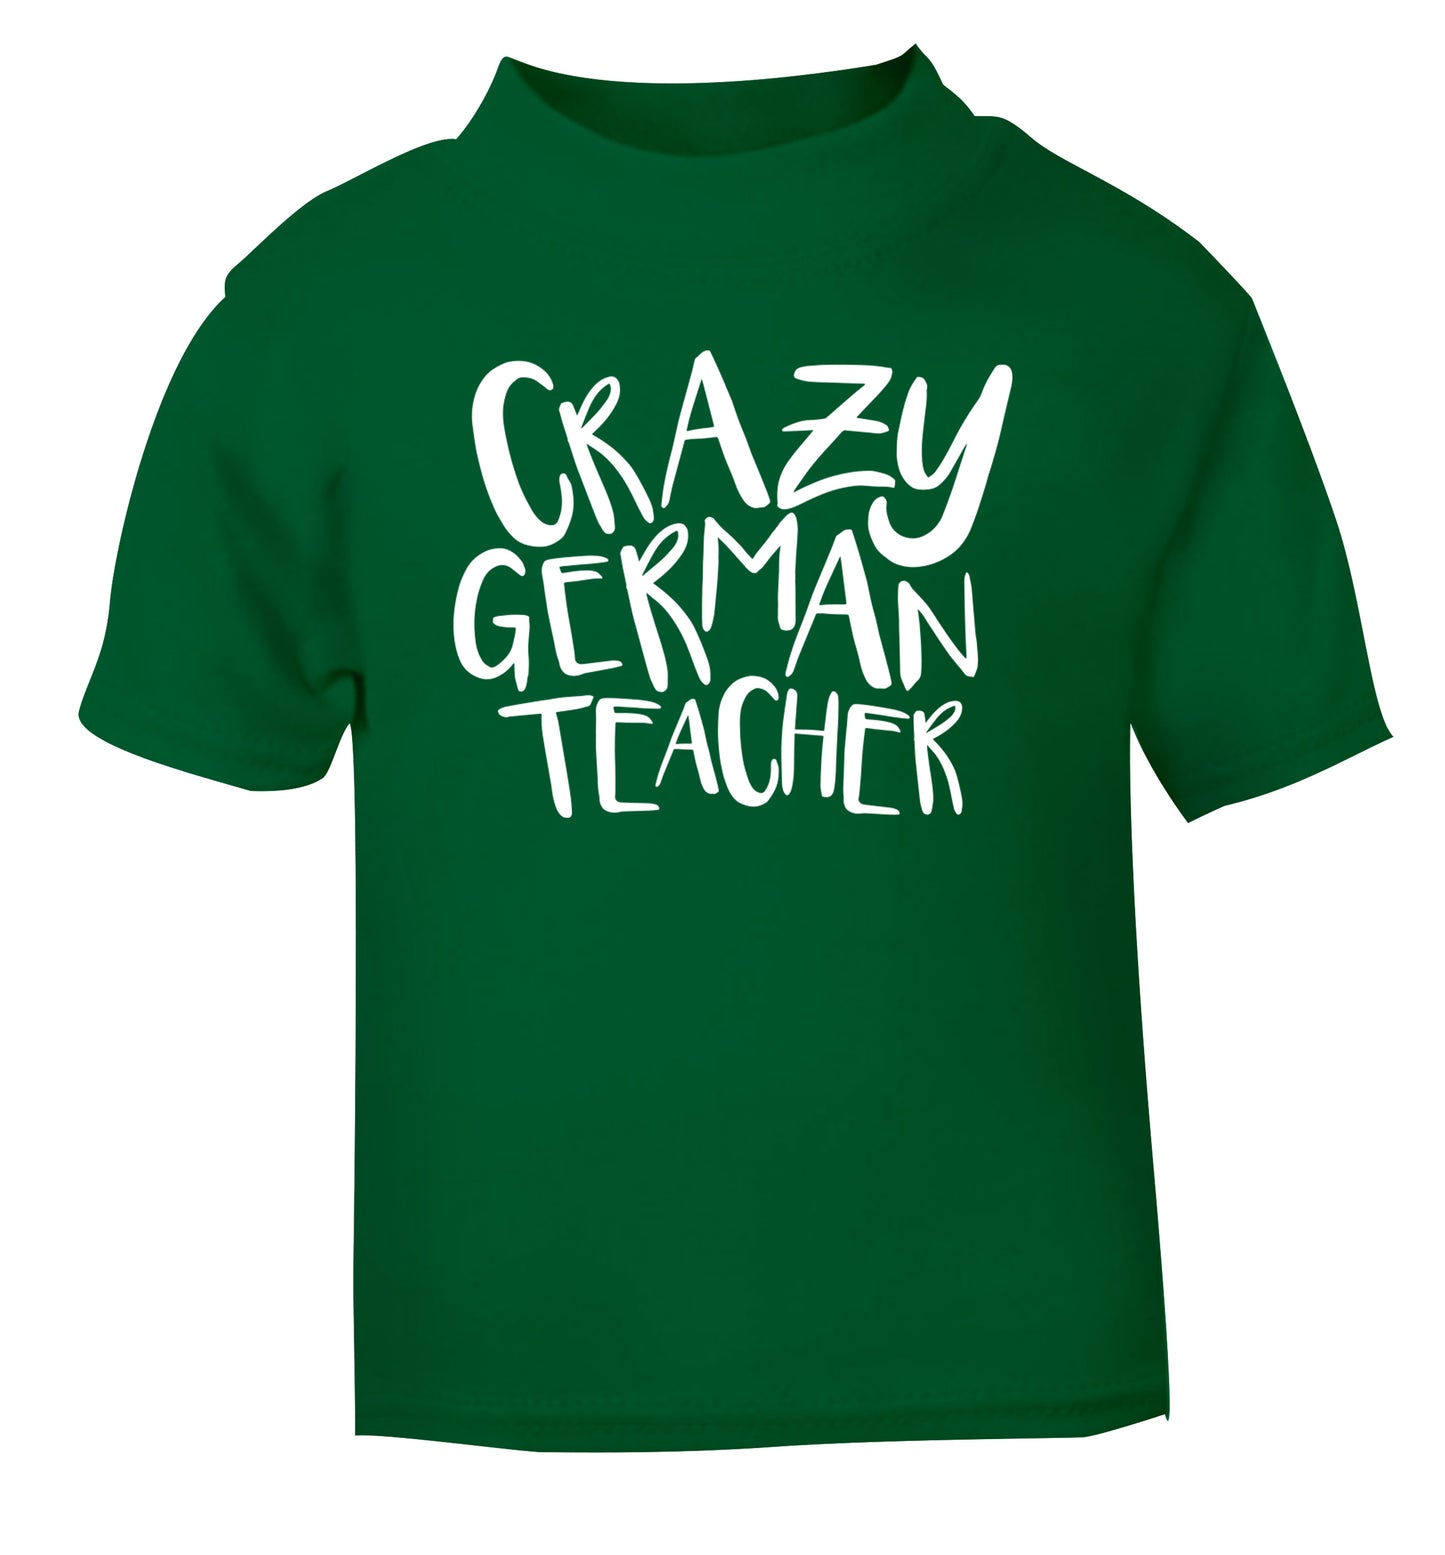 Crazy german teacher green Baby Toddler Tshirt 2 Years